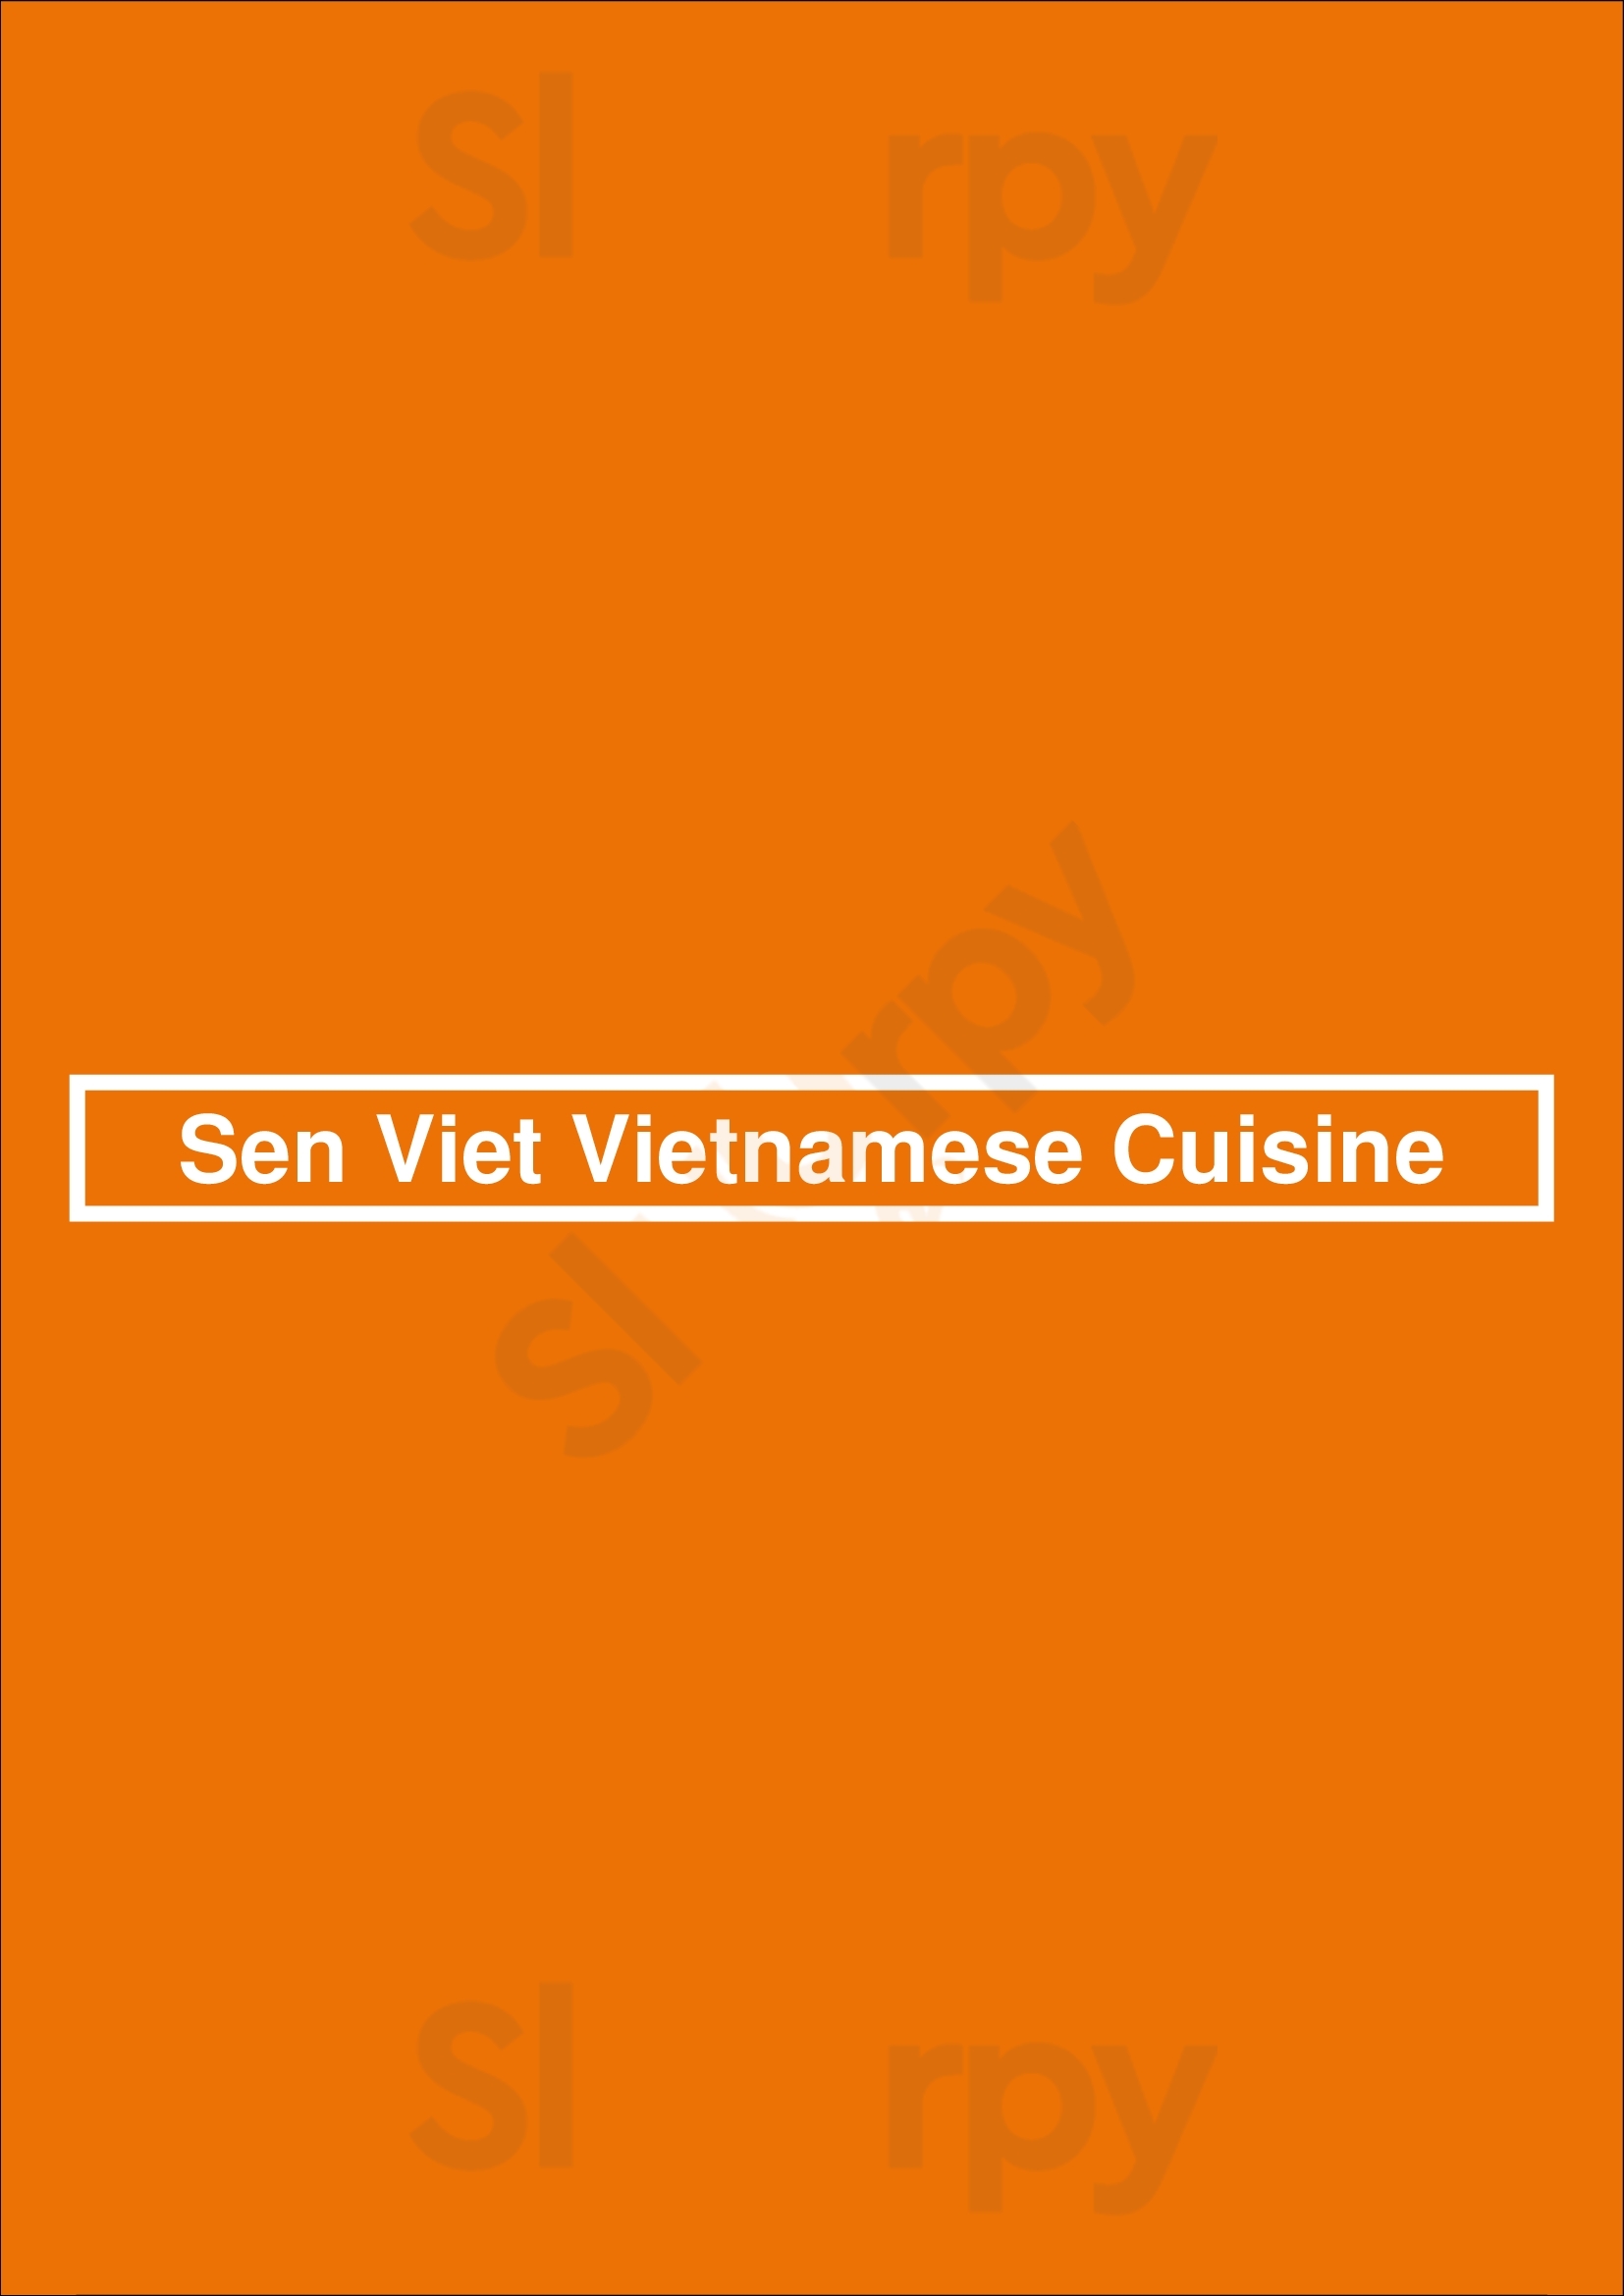 Sen Viet Vietnamese Cuisine Amsterdam Menu - 1